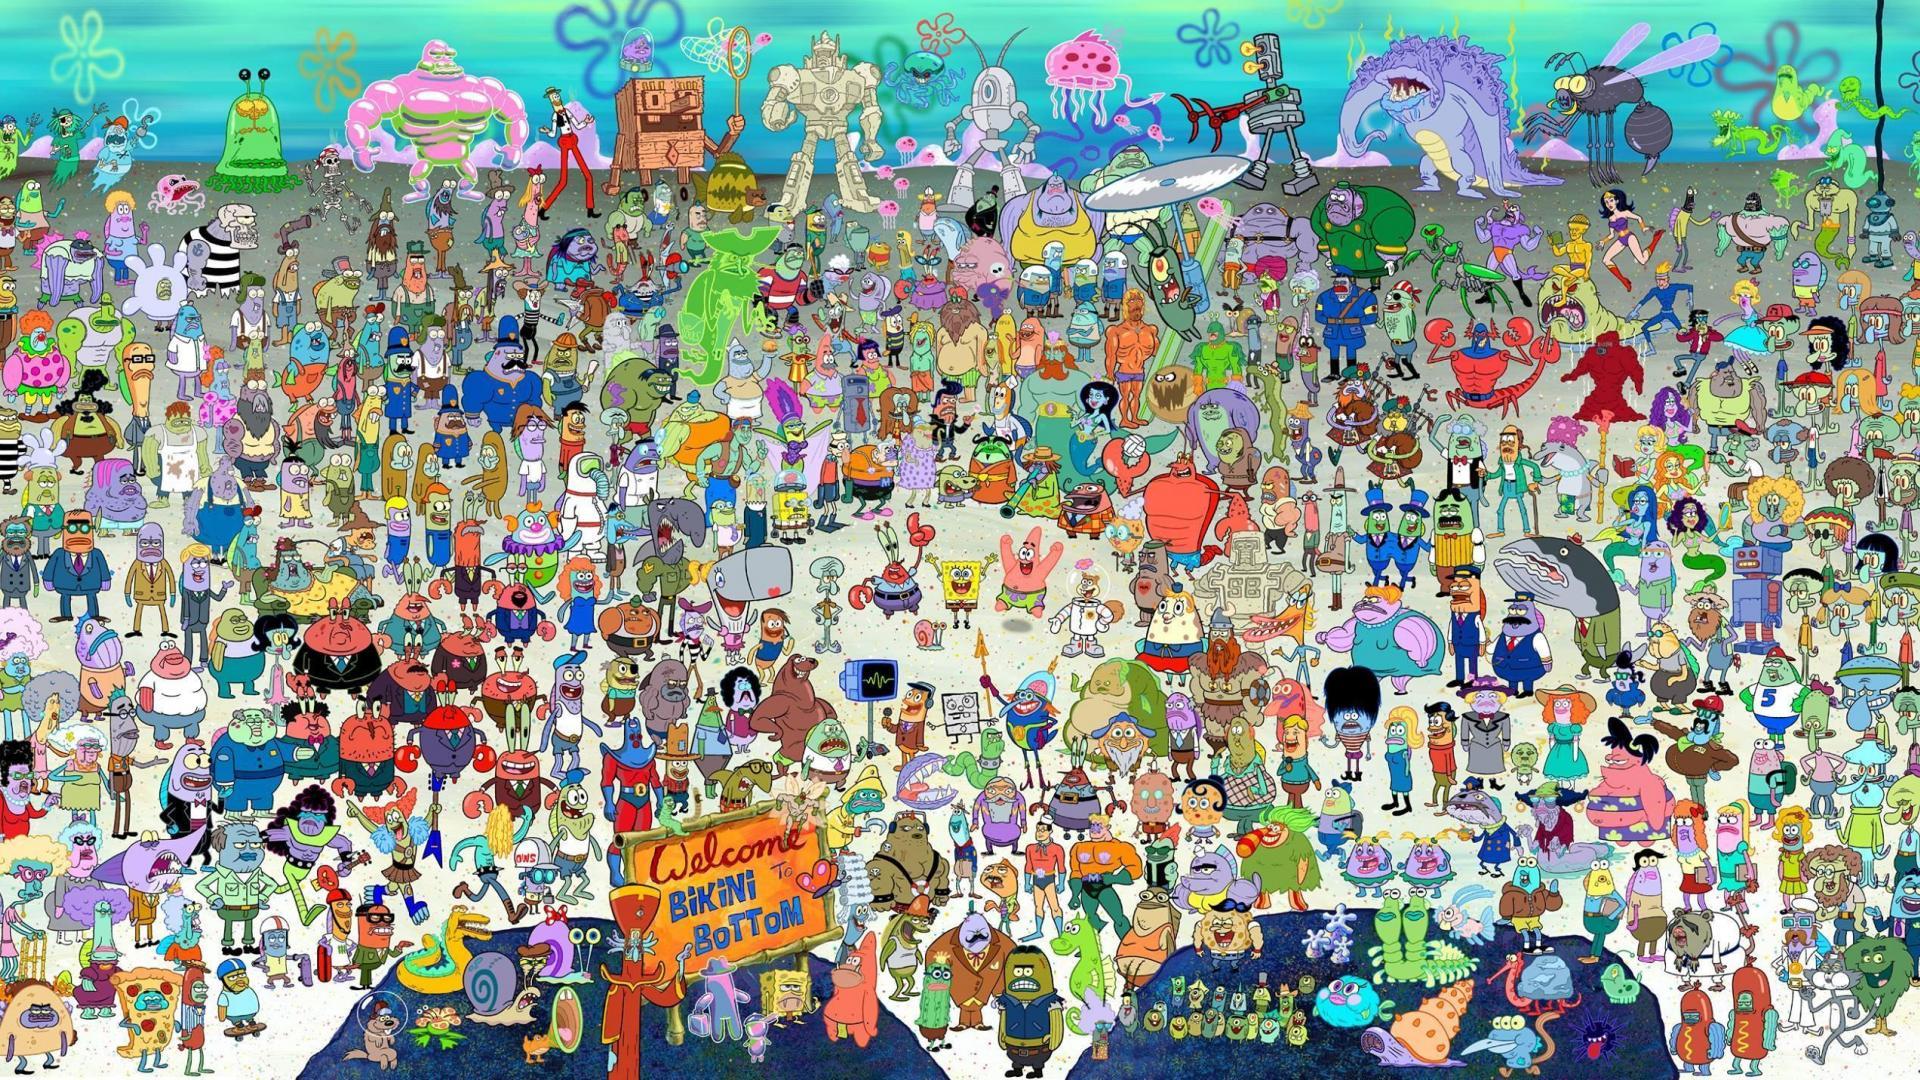 Spongebob Squarepants Wallpaper, Image Collection of Spongebob